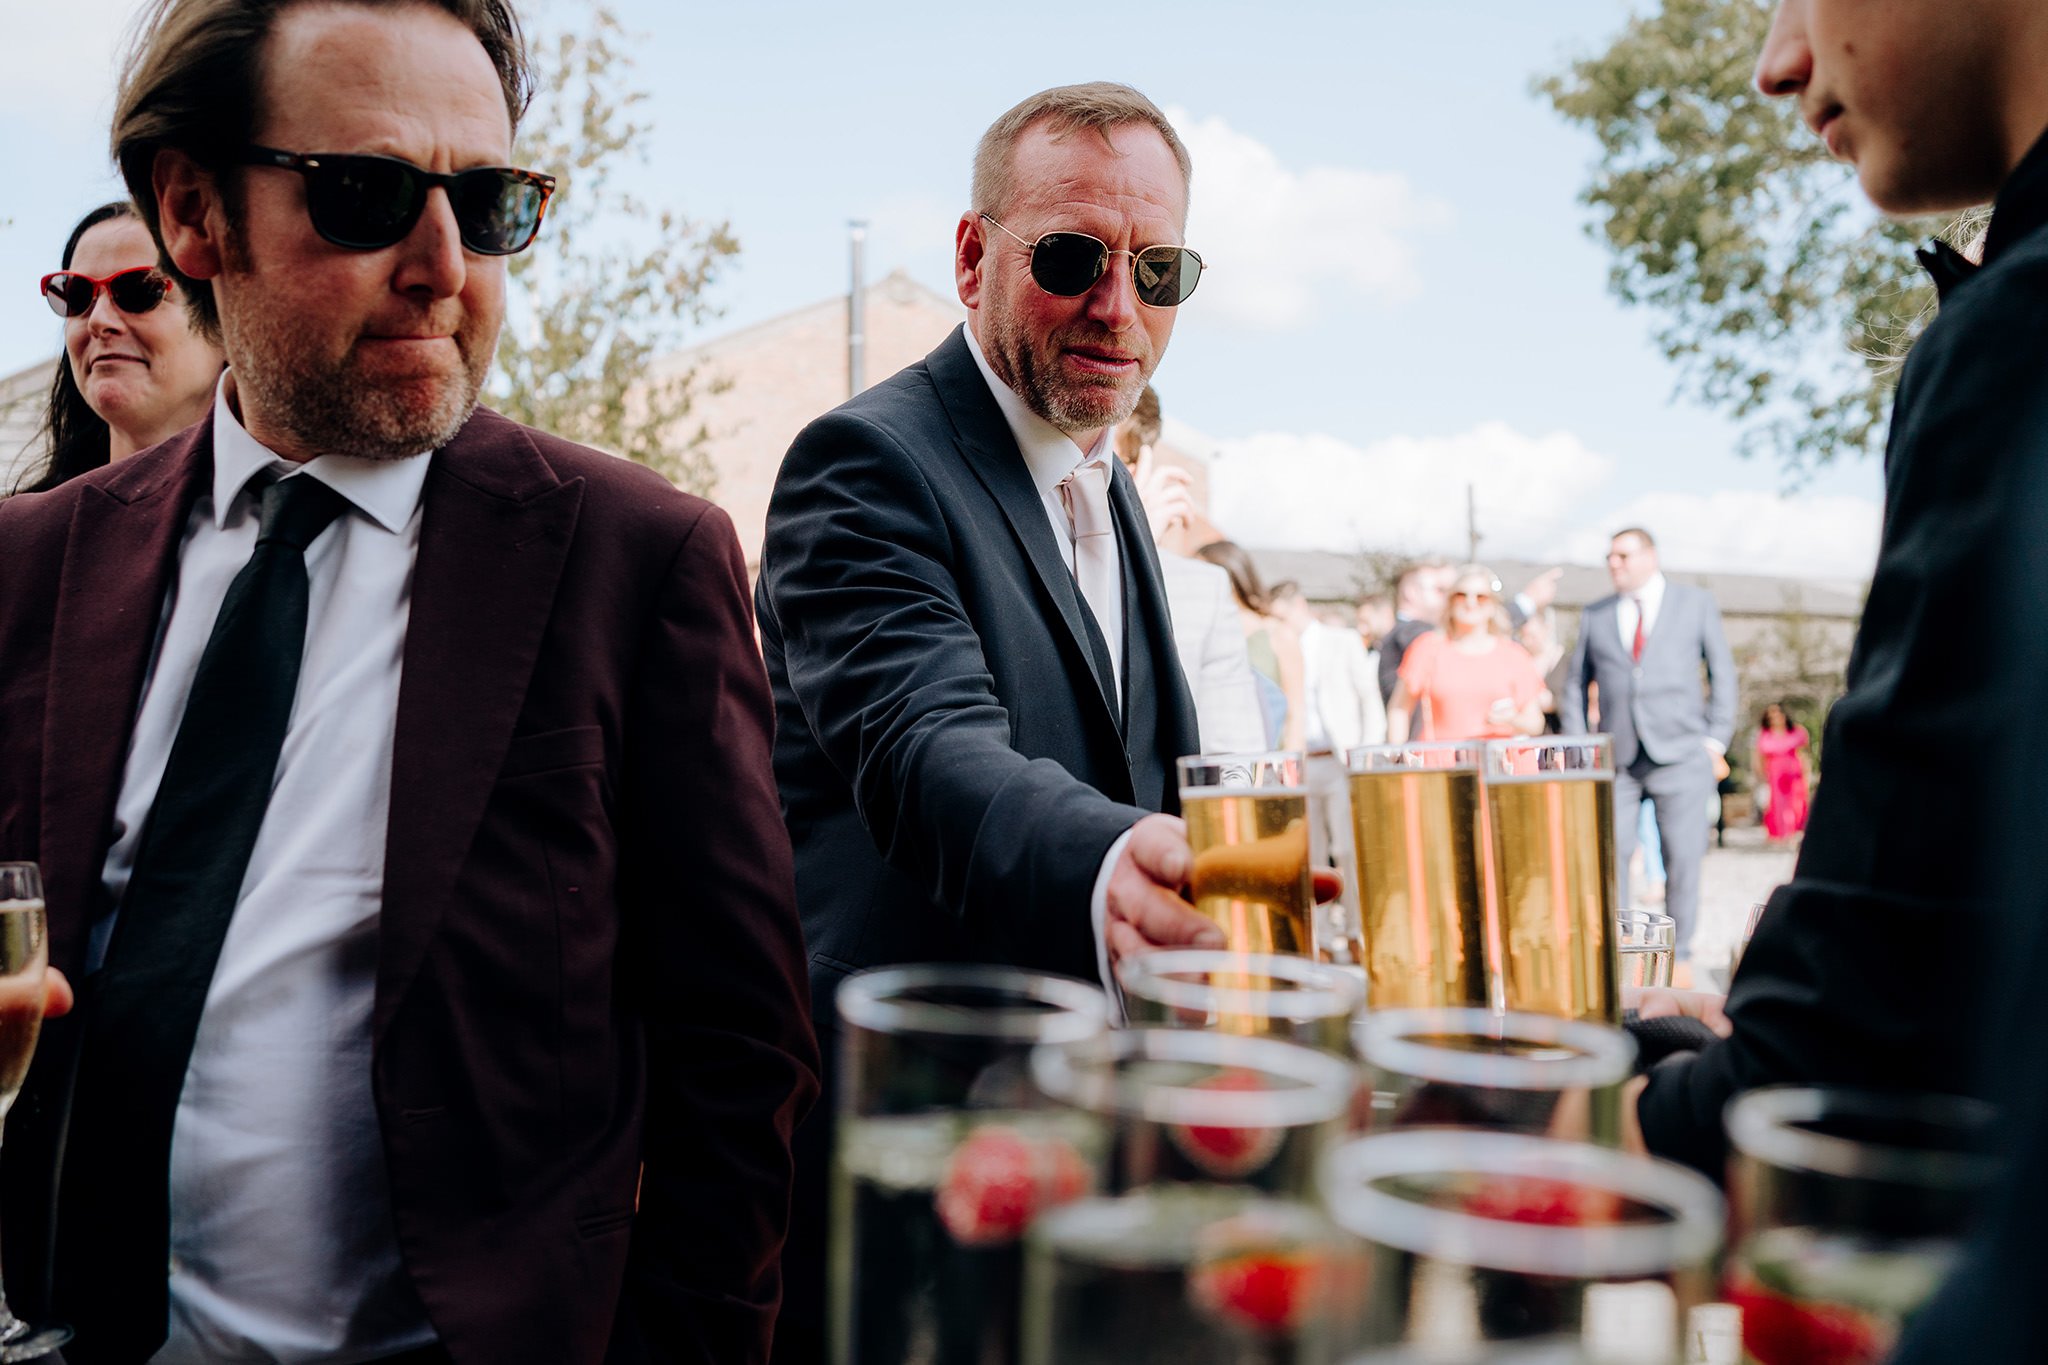 Wedding guest taking a drink